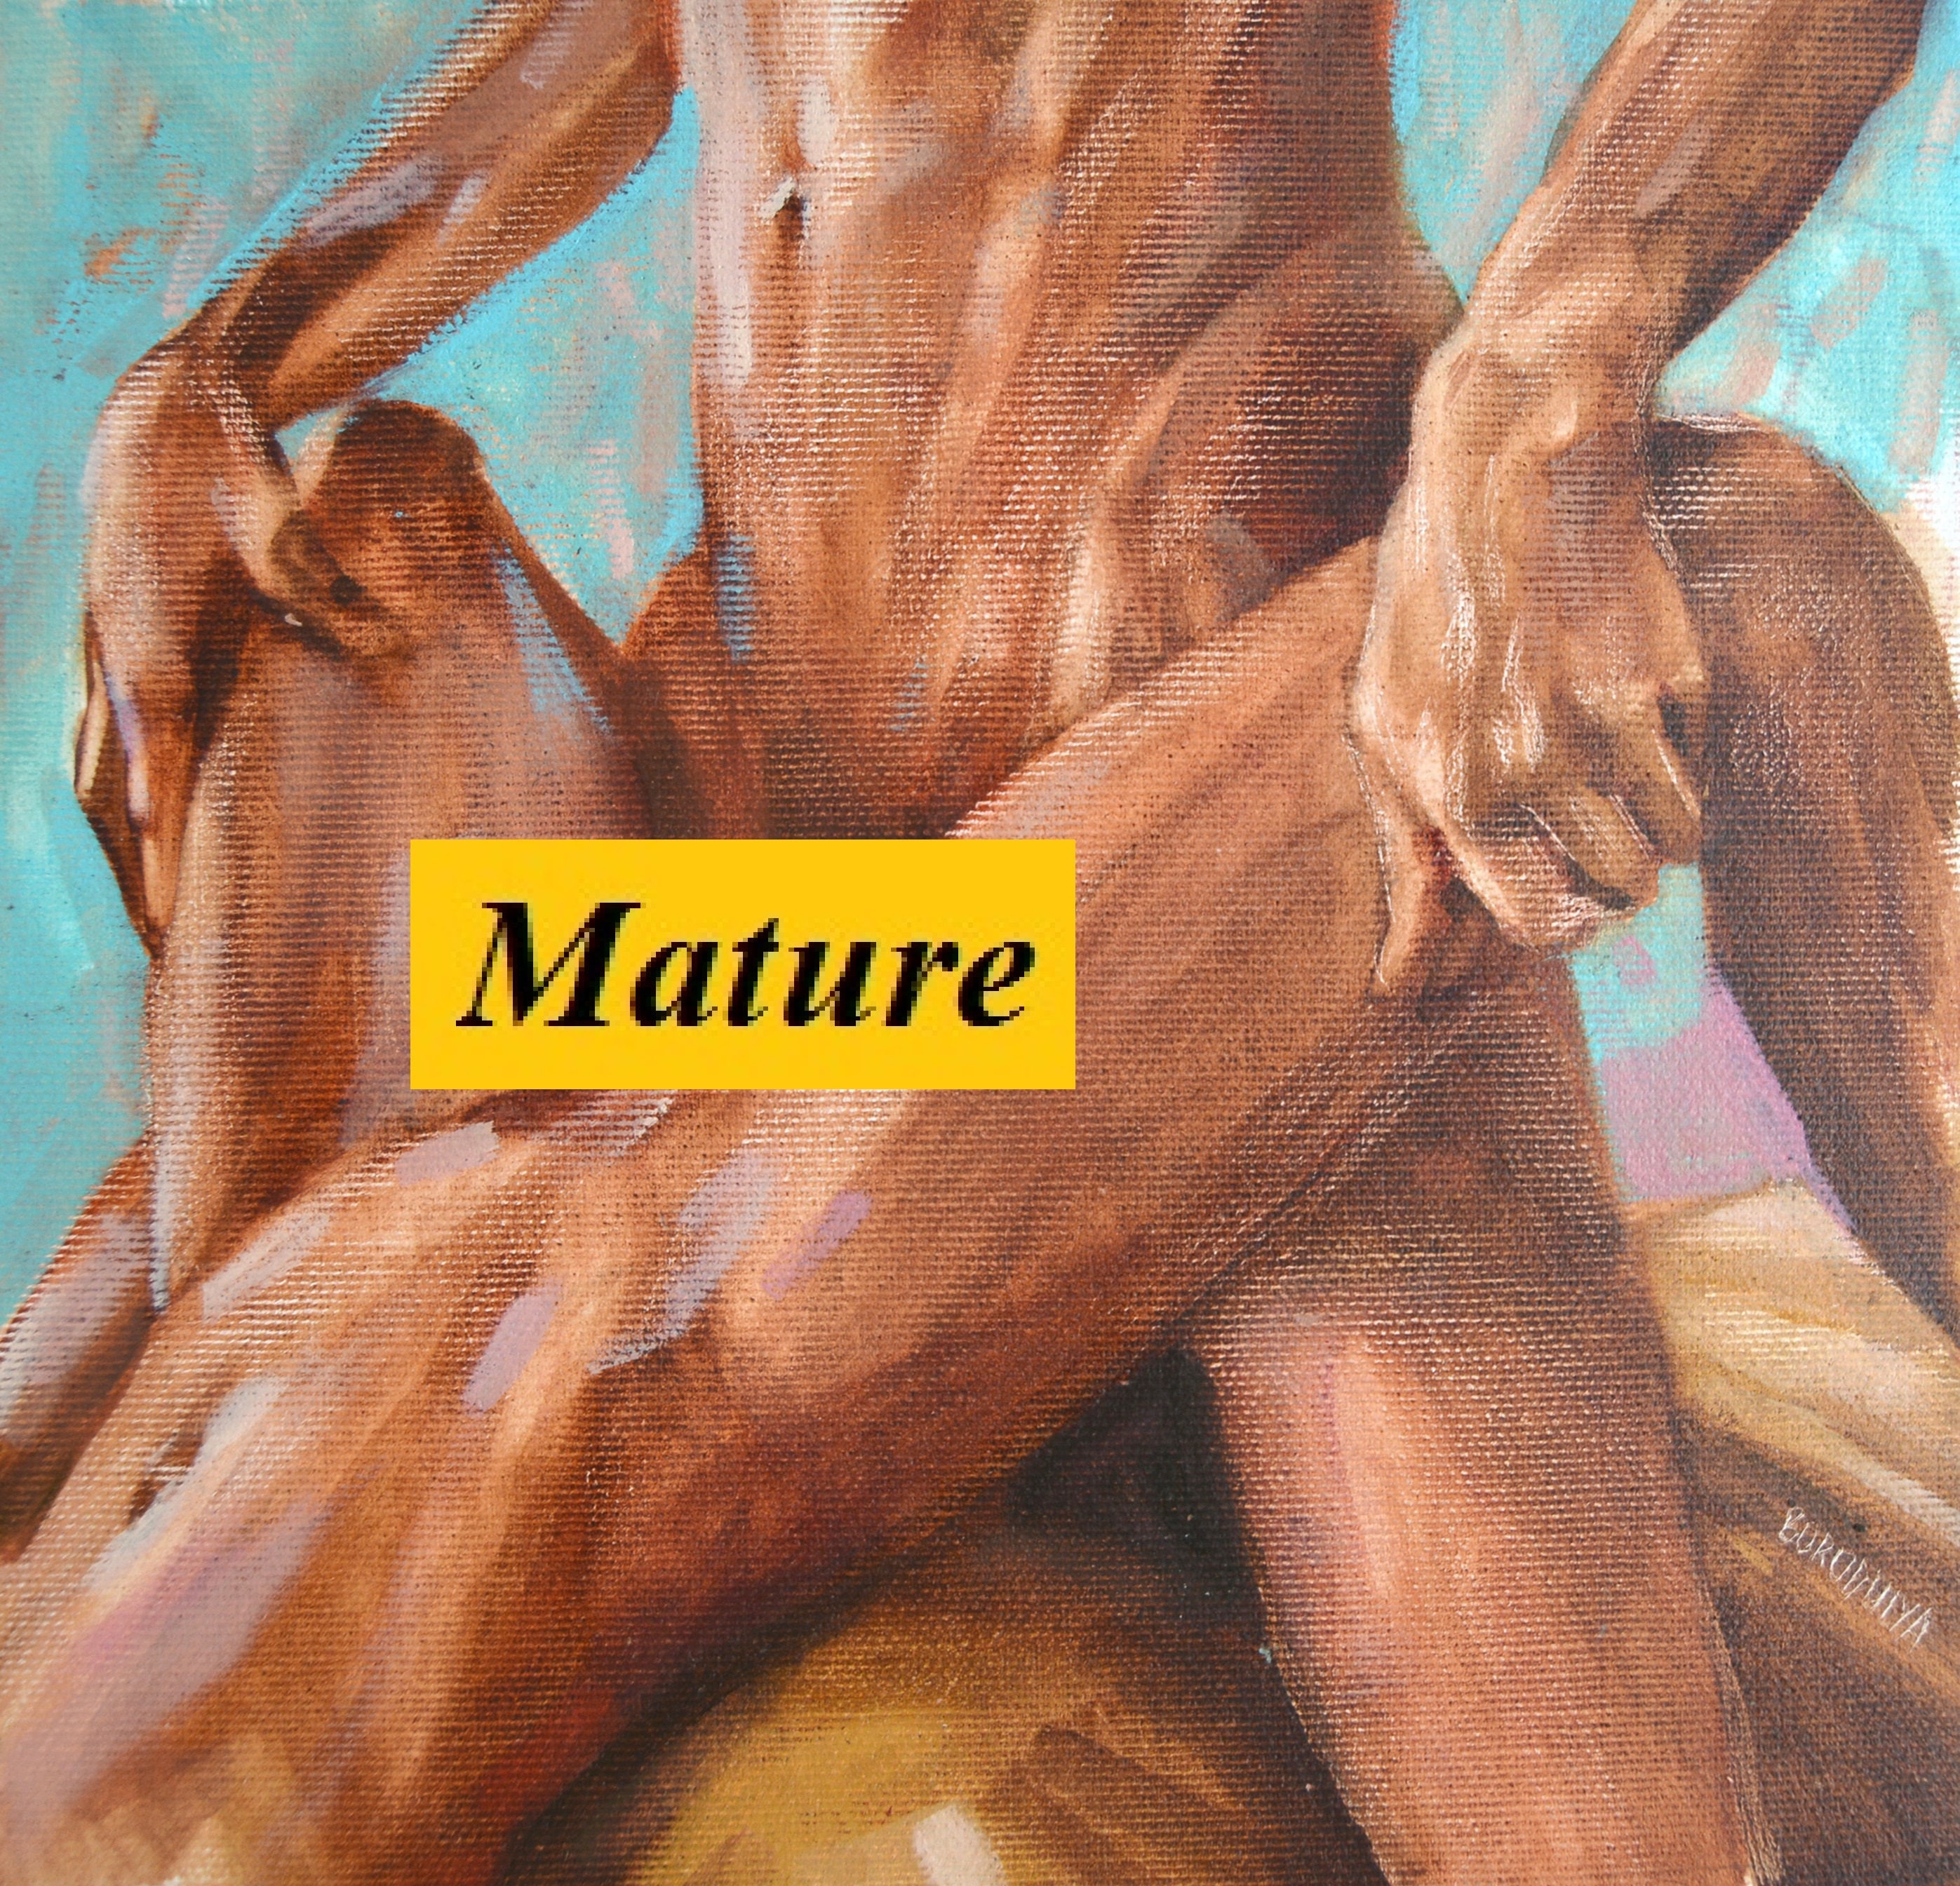 Mature Sex Wall Art Original Oil Painting Erotic Art Sex picture